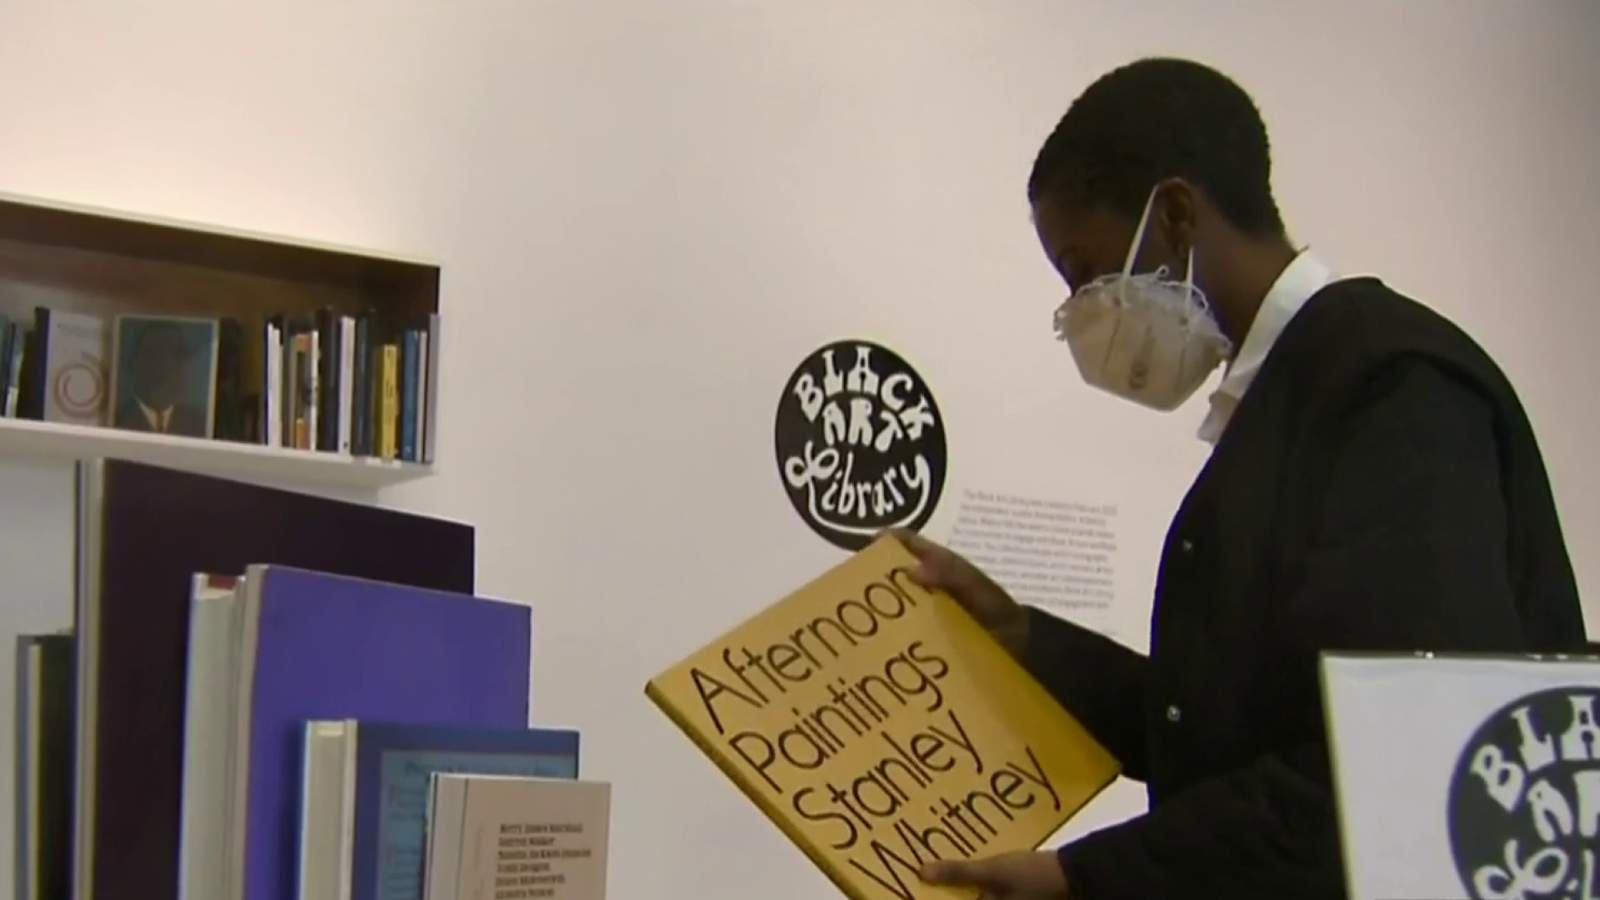 ‘Black Art Library’ exhibit at MOCAD celebrates work of artists through books